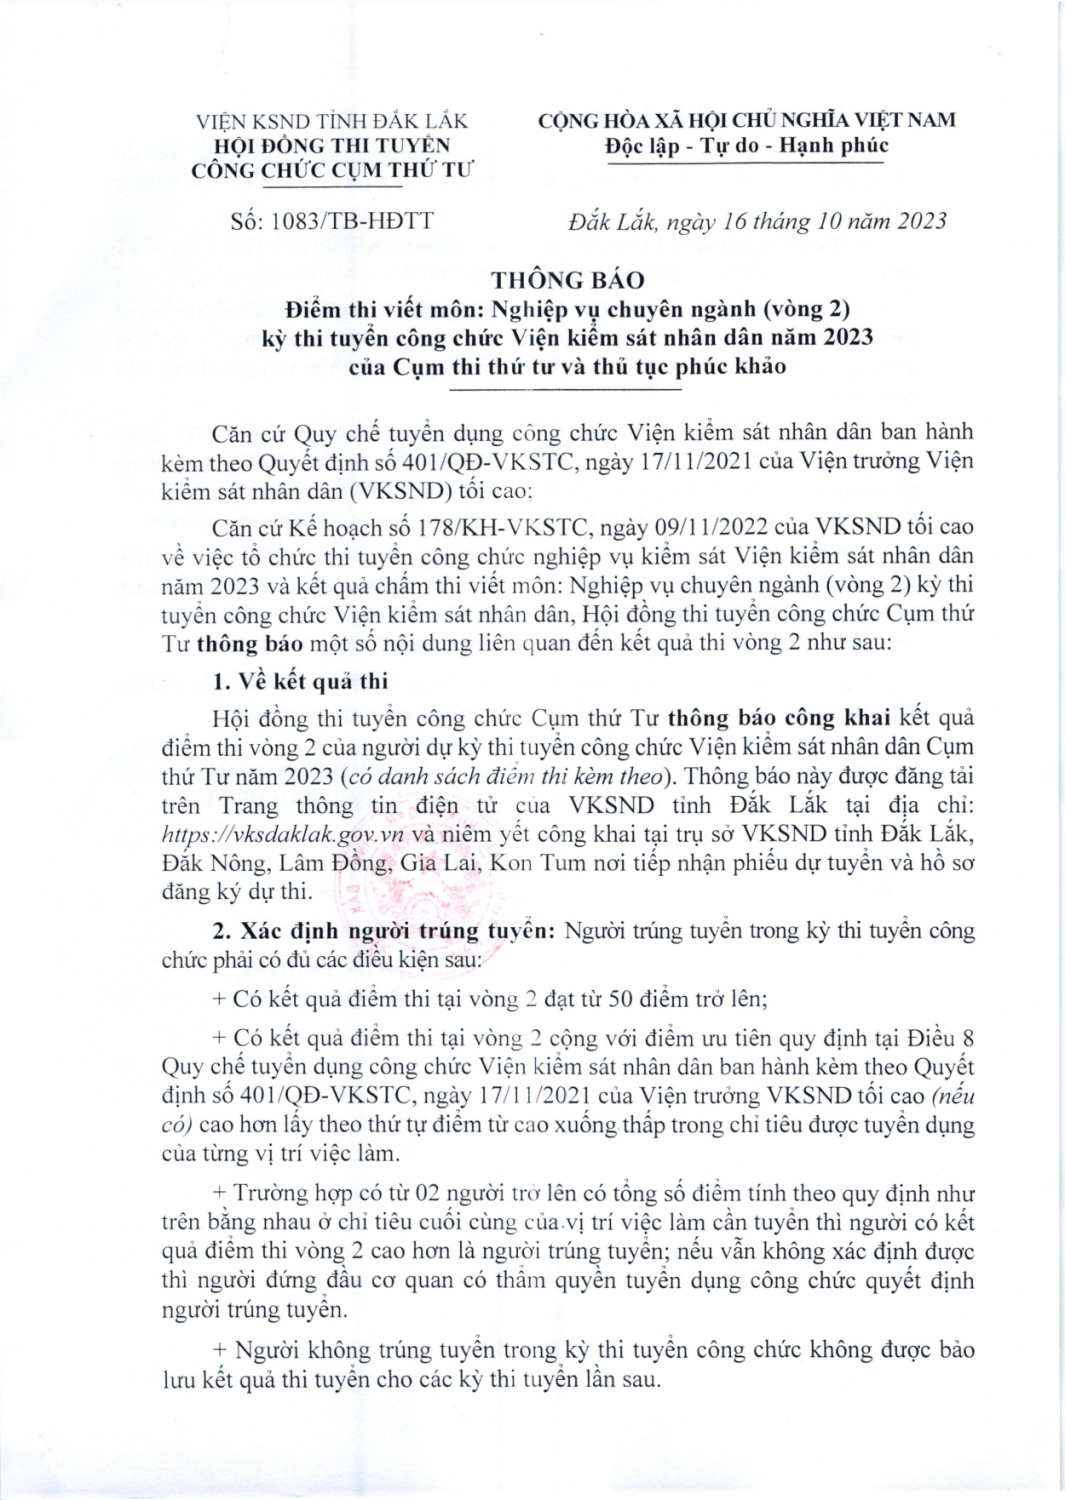 Thong bao diem thi cong chuc 2023 page 0001